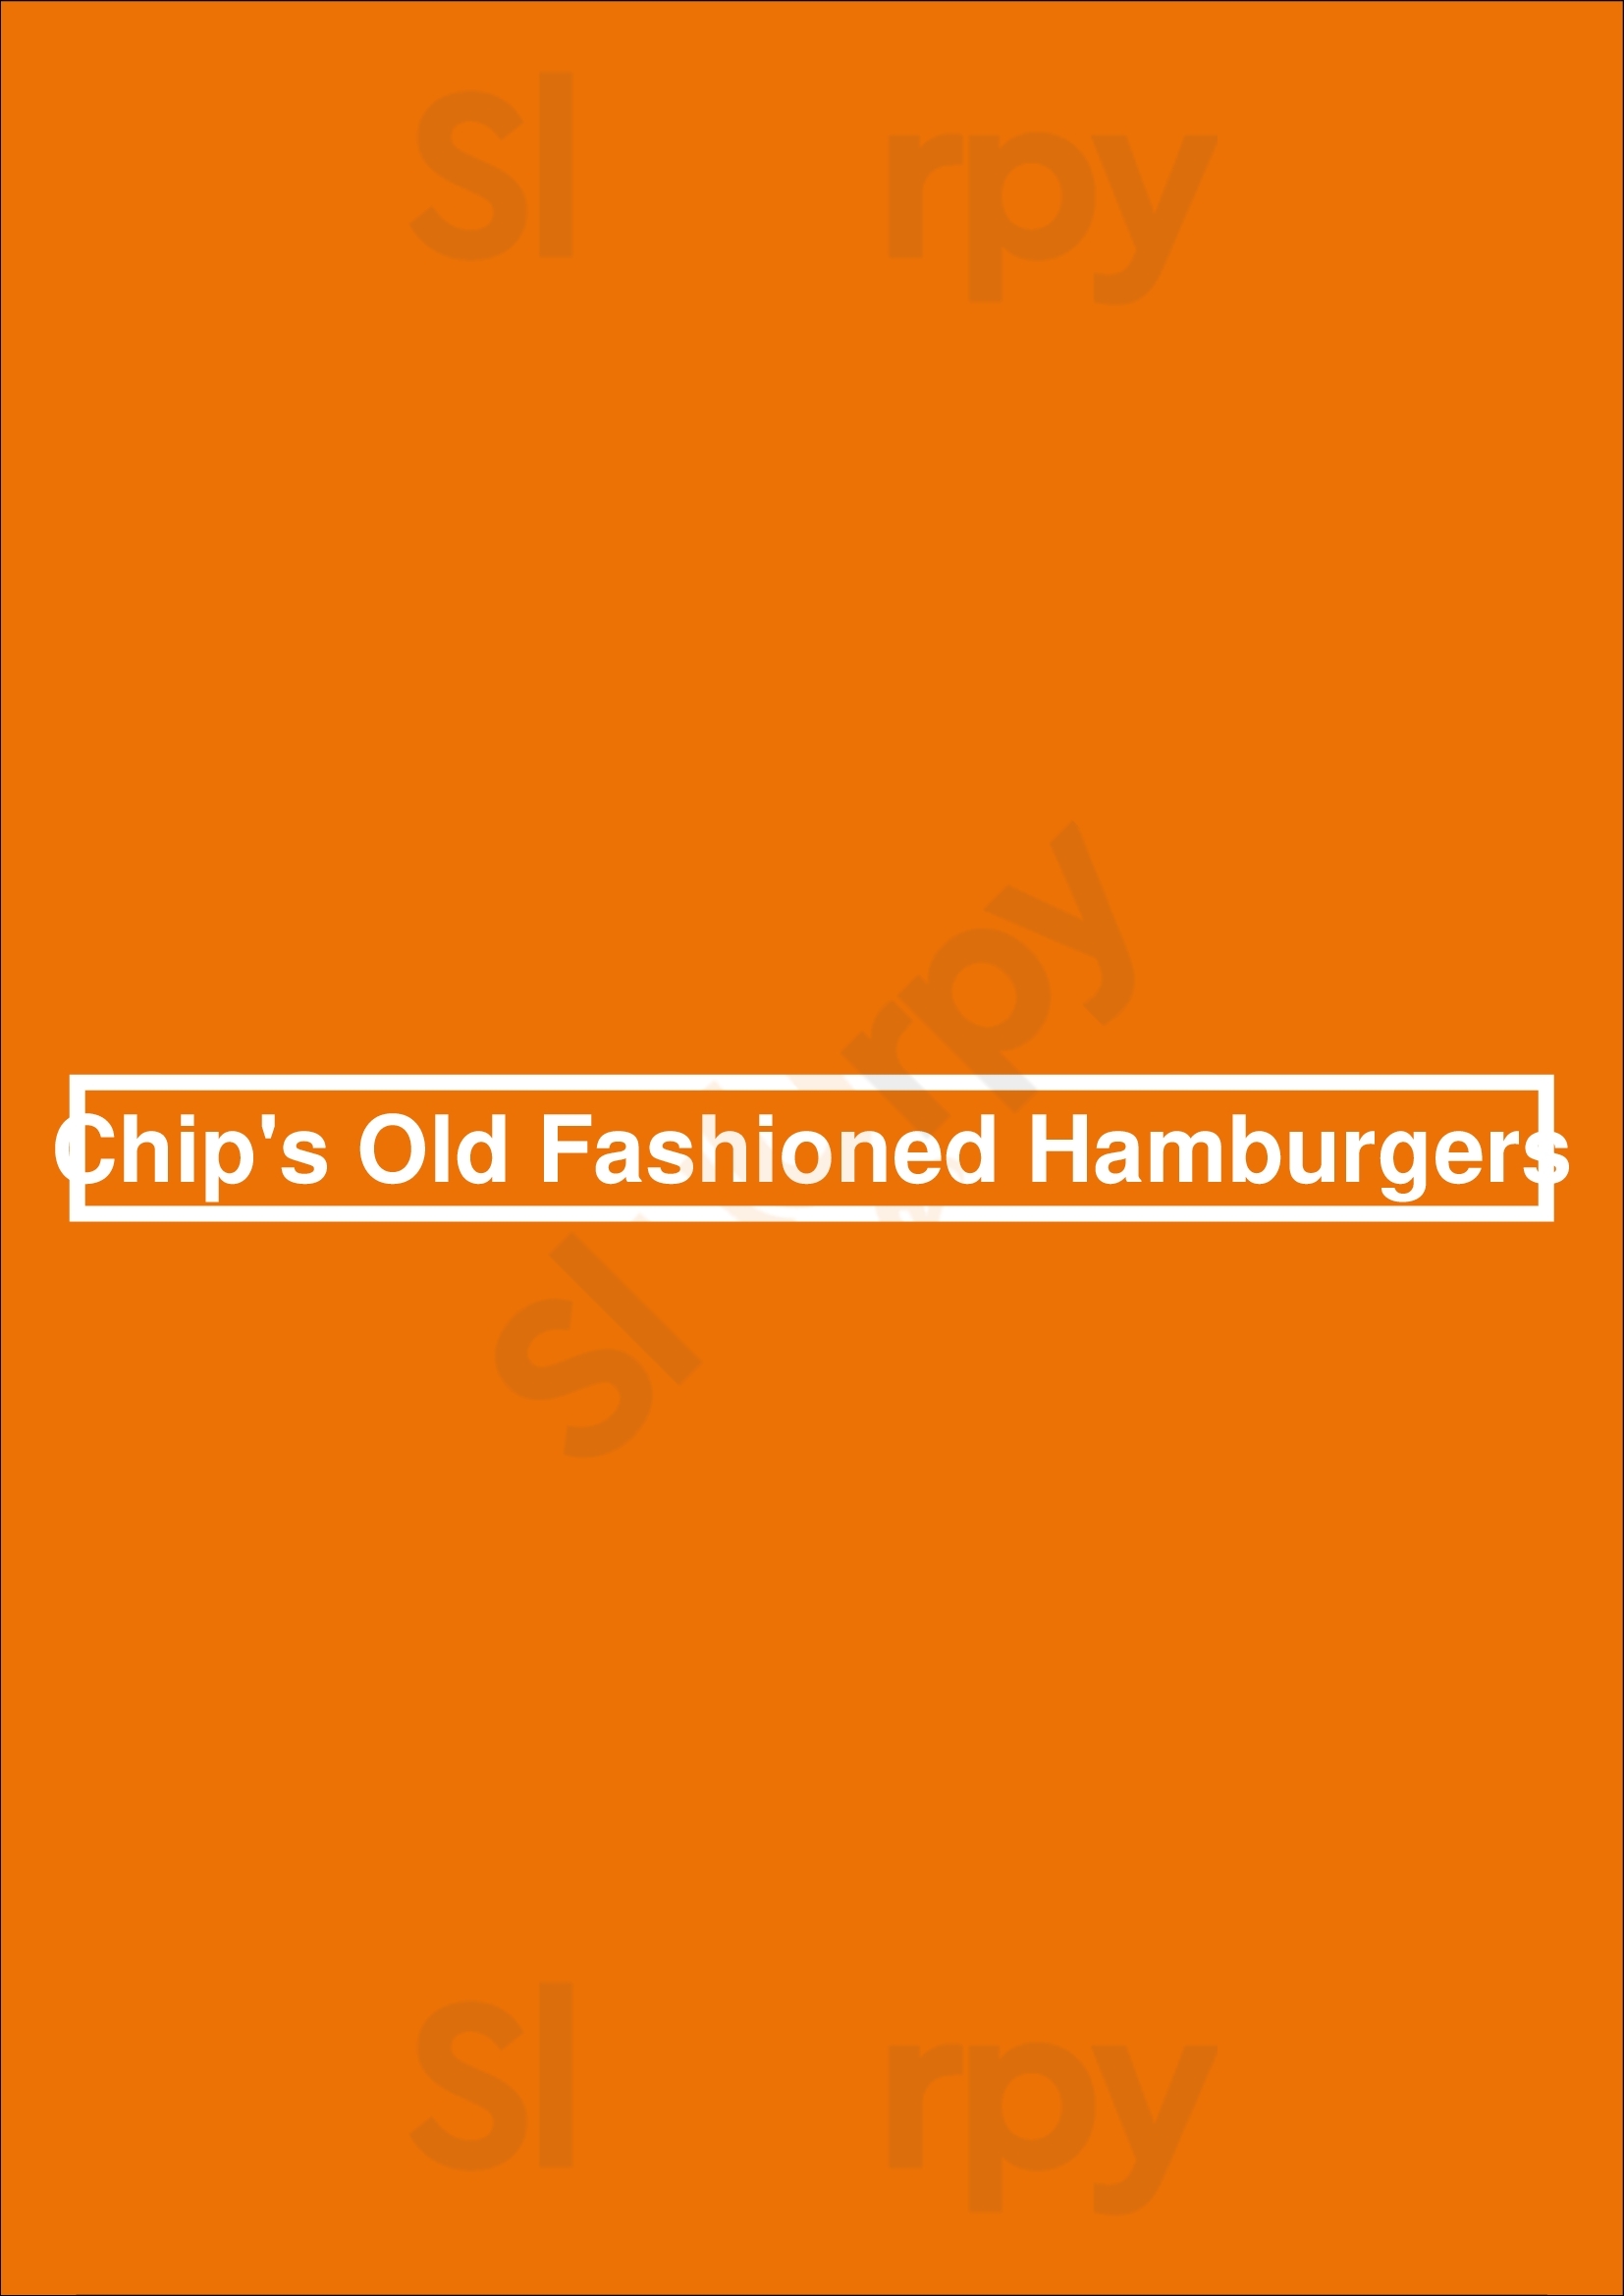 Chip's Old Fashioned Hamburgers Plano Menu - 1